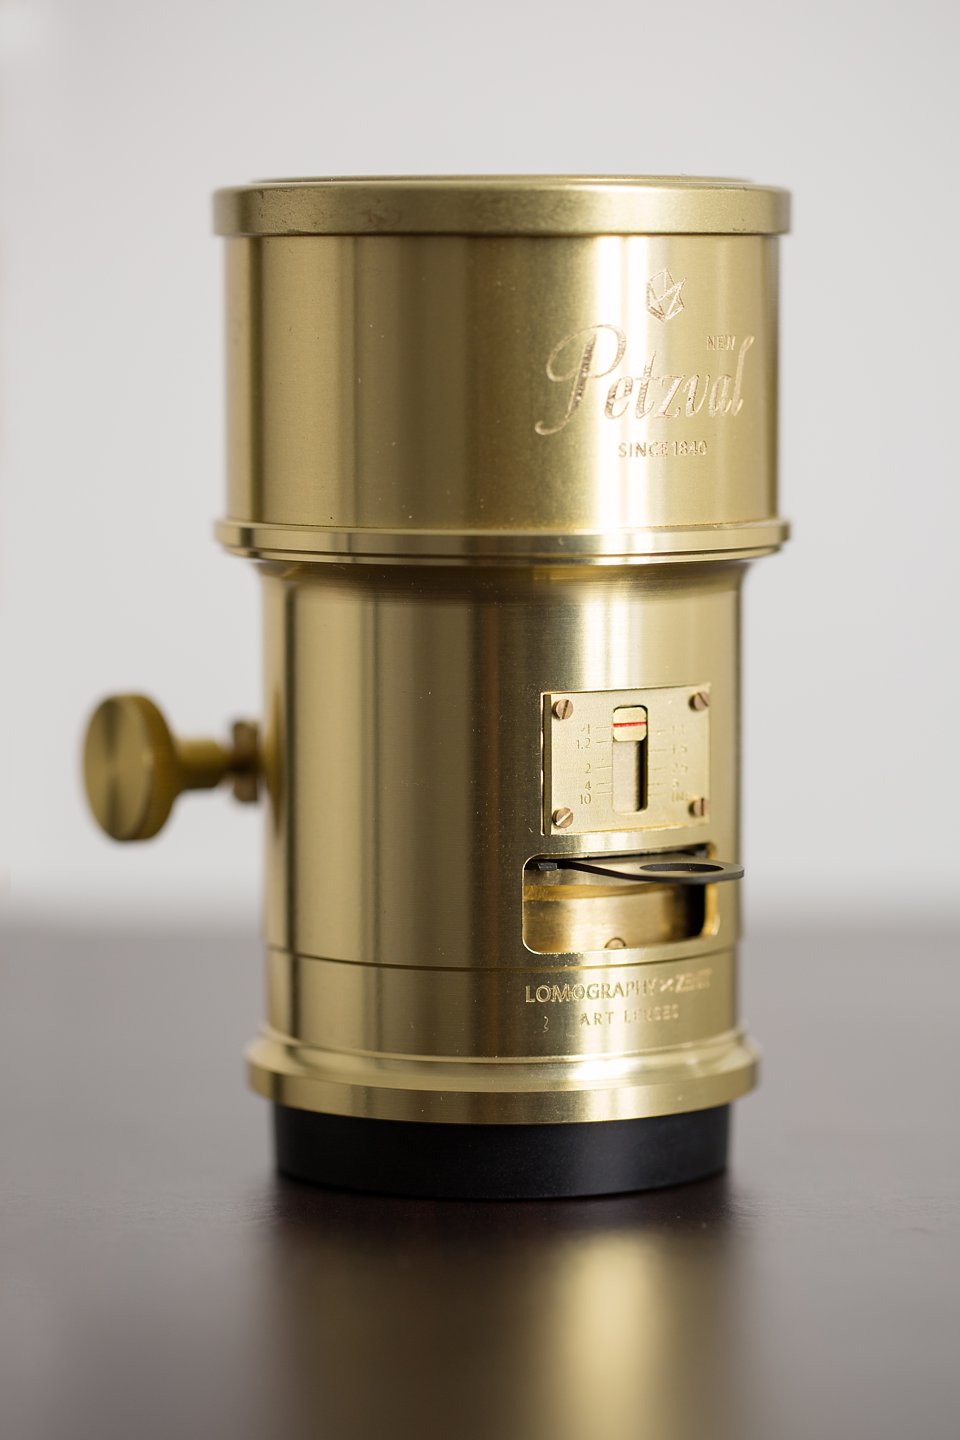 The Lomography Petzval brass Art lens